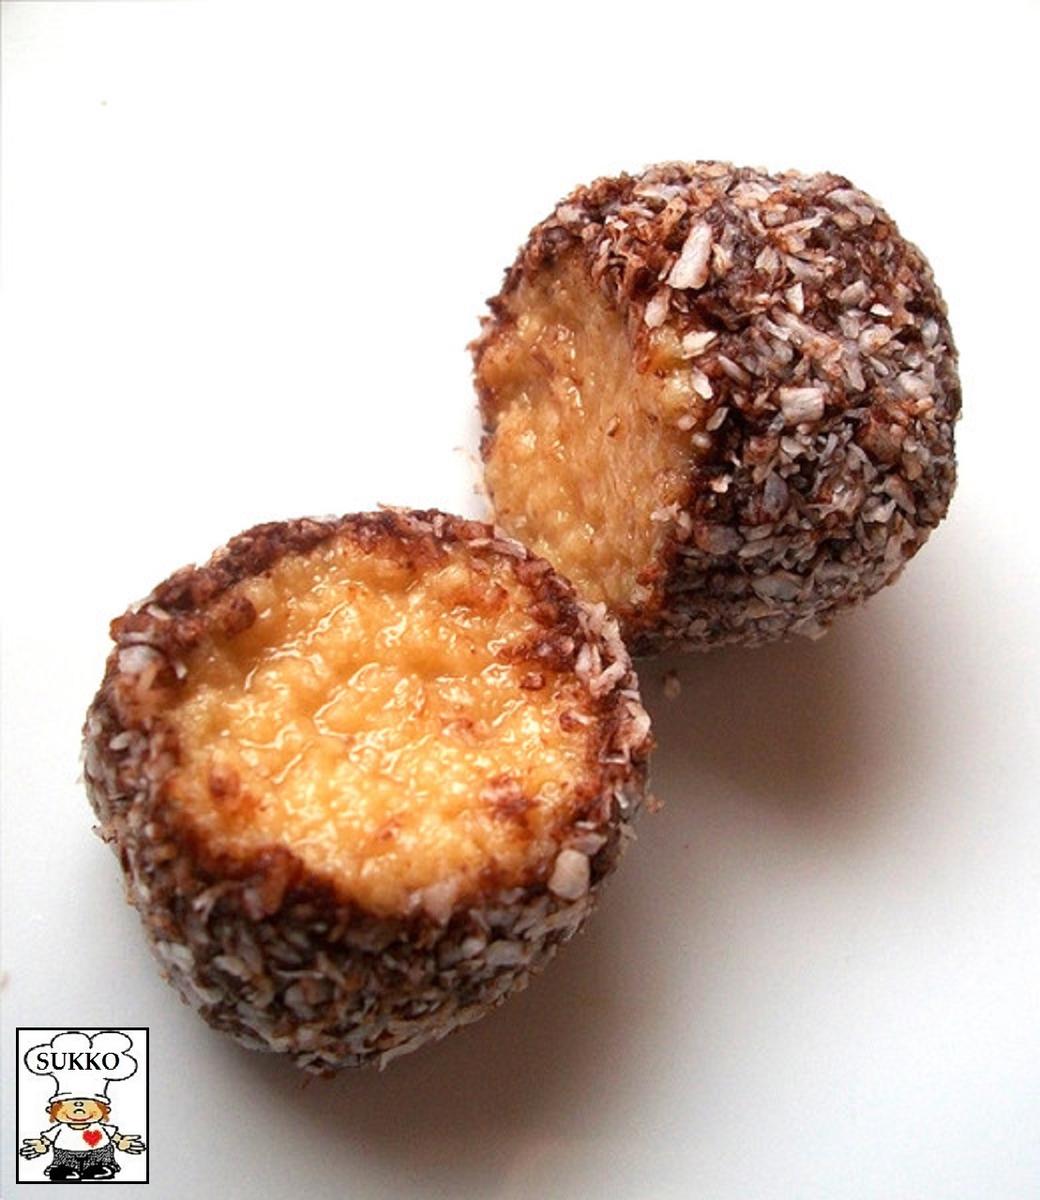 Konfekt/Süßware - Kokos - Erdnuss - Pralinen - Rezept - Bild Nr. 3675